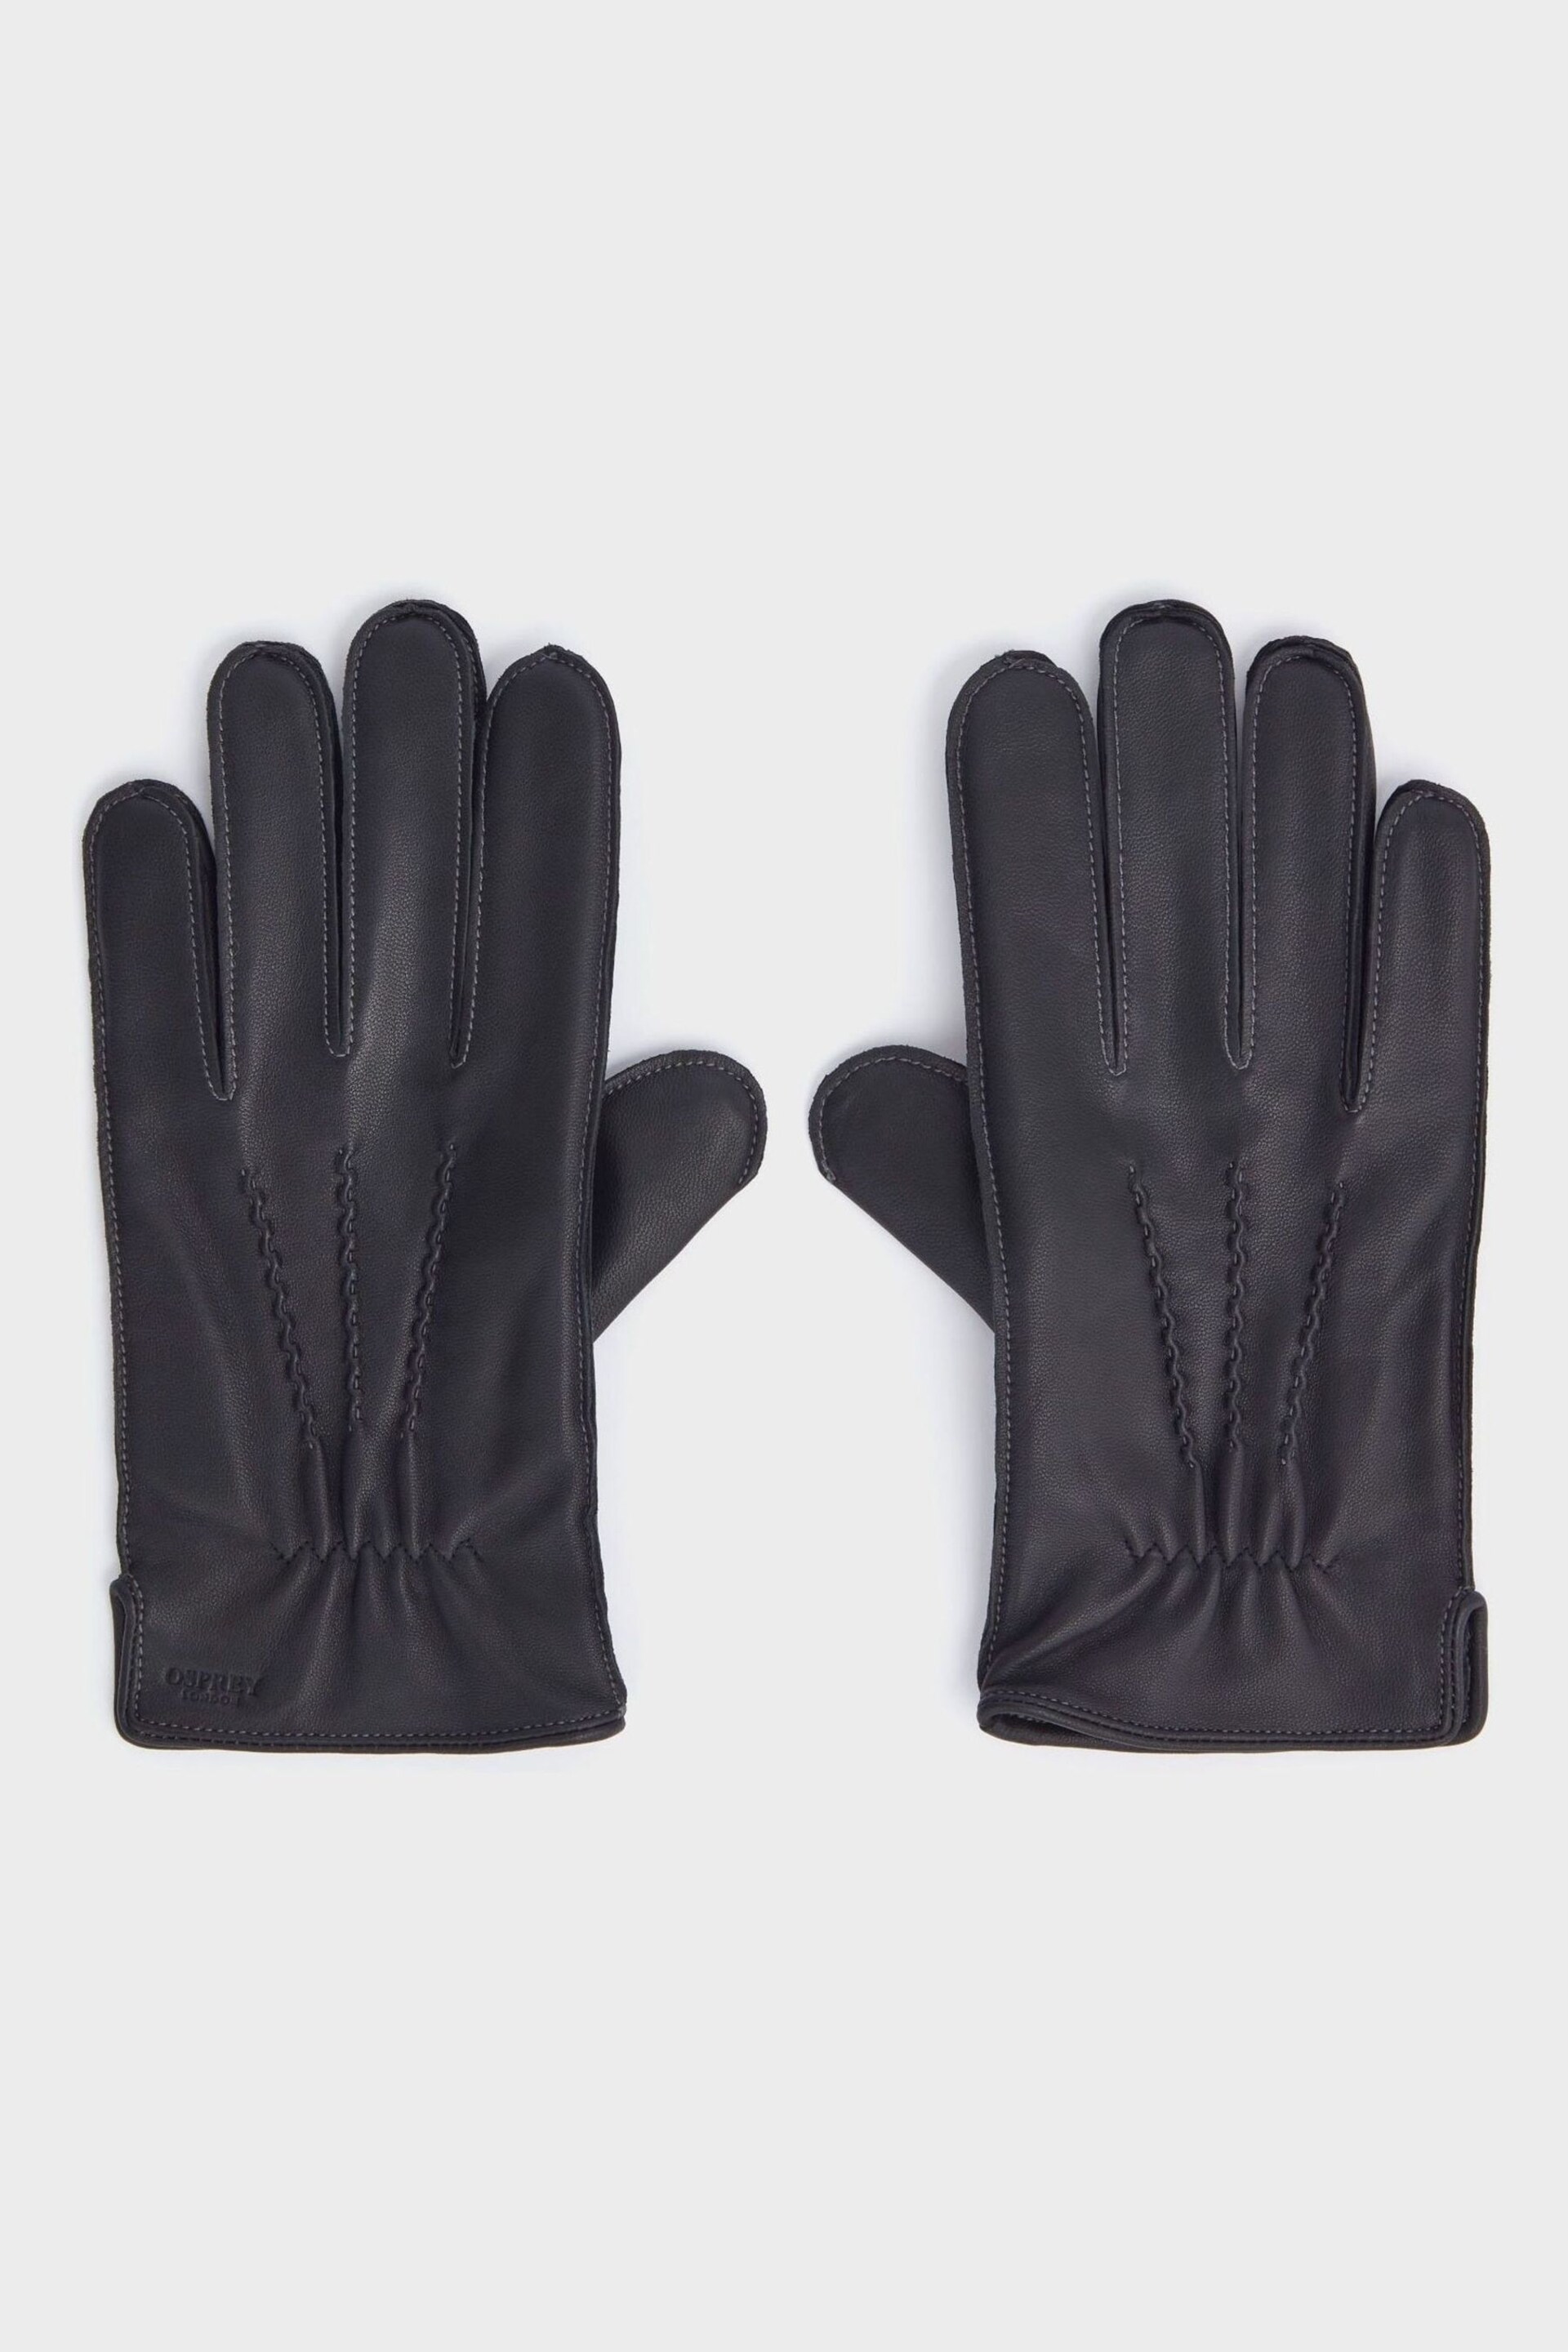 Osprey London The Harvey Leather Gloves - Image 1 of 5